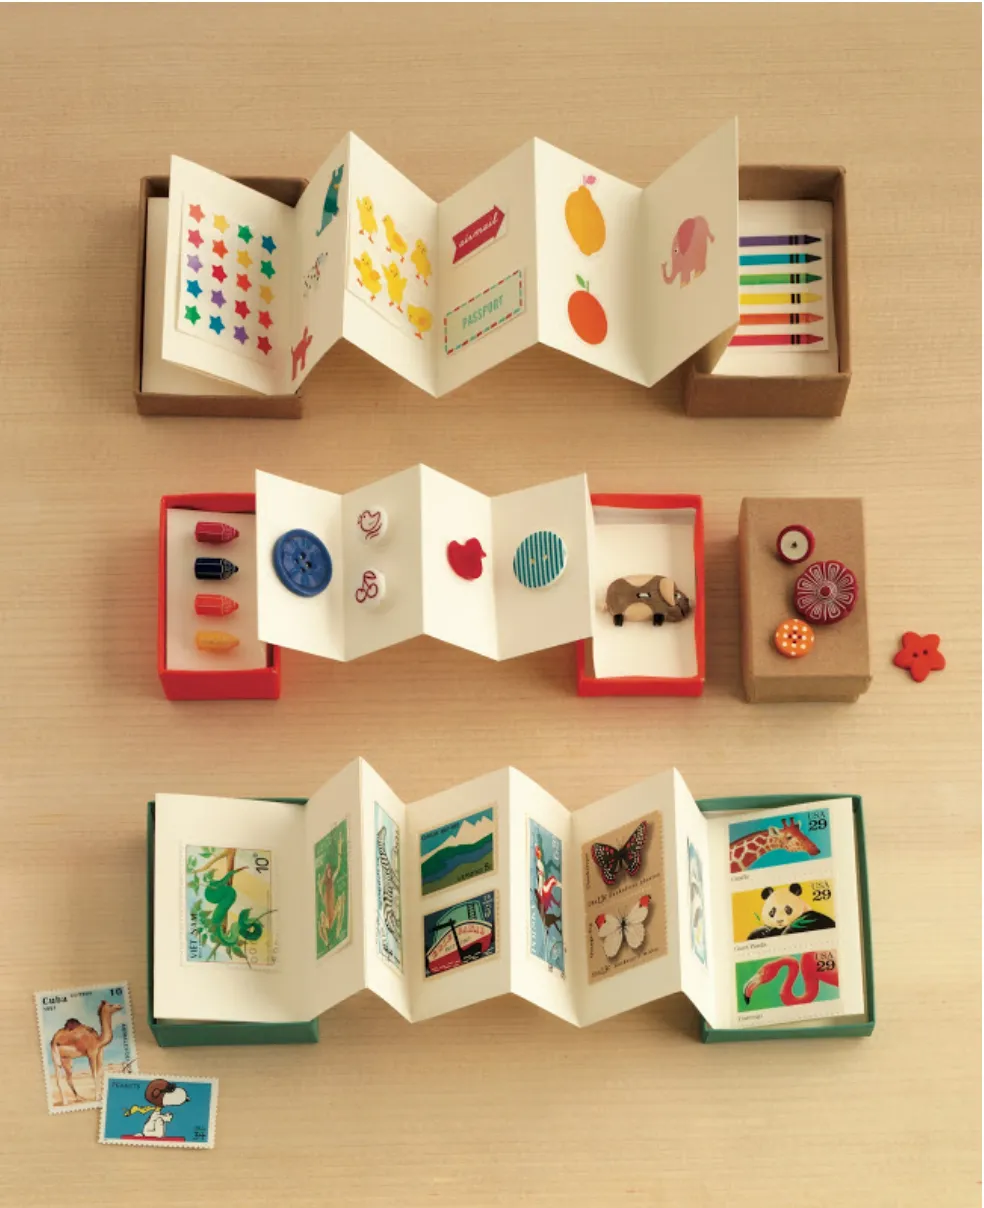 CLZOUD Art Supplies for Teens Kids Beginners Easter Scratches Magic Colored  Rainbow Scratch Paper Card Scratch Crafts Black